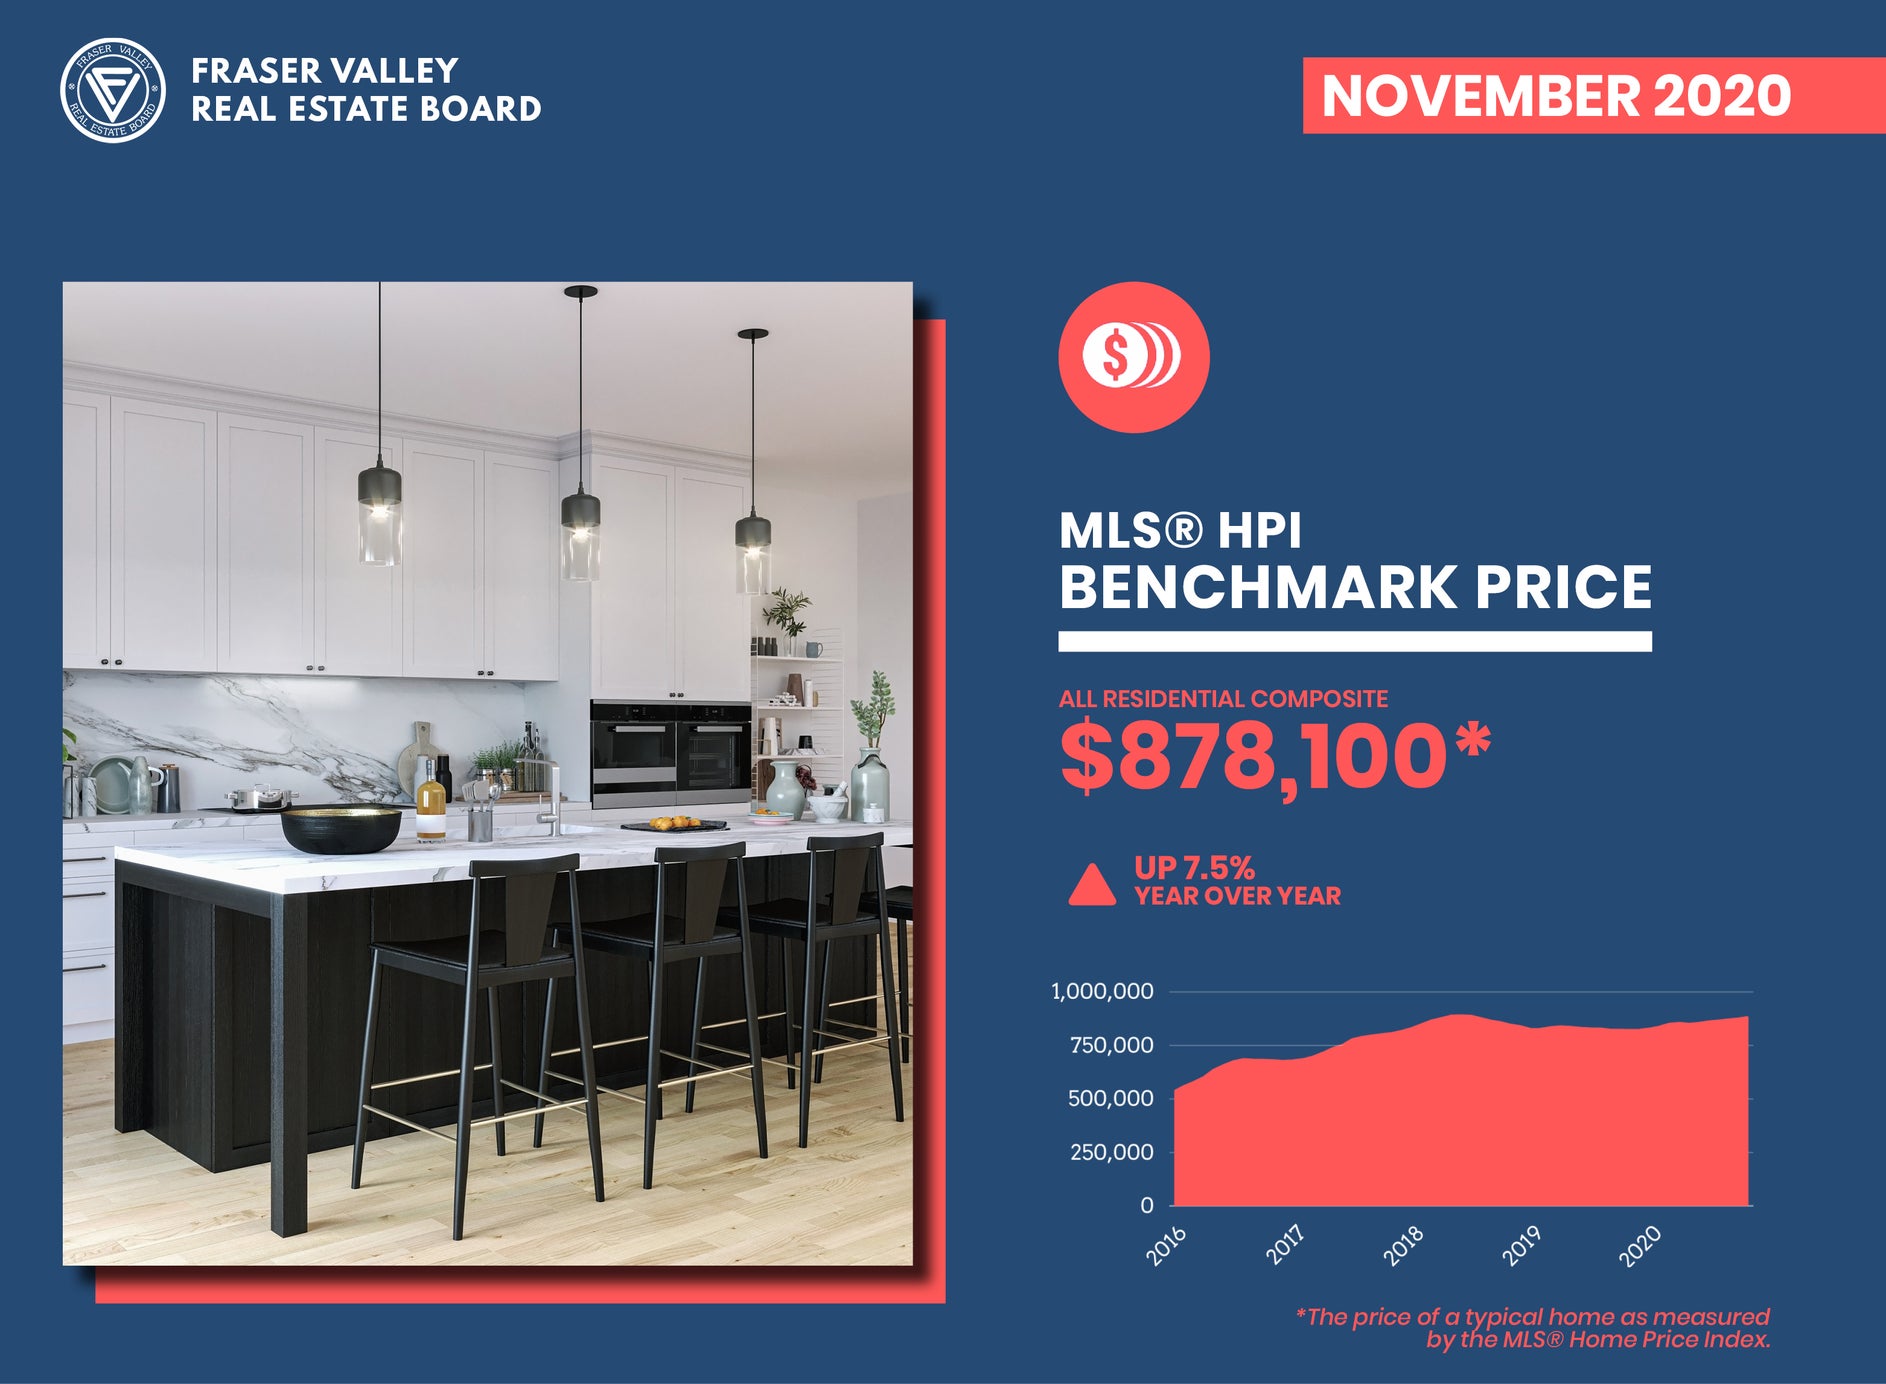 Fraser Valley Real Estate Market Report November 2020 – Benchmark Price